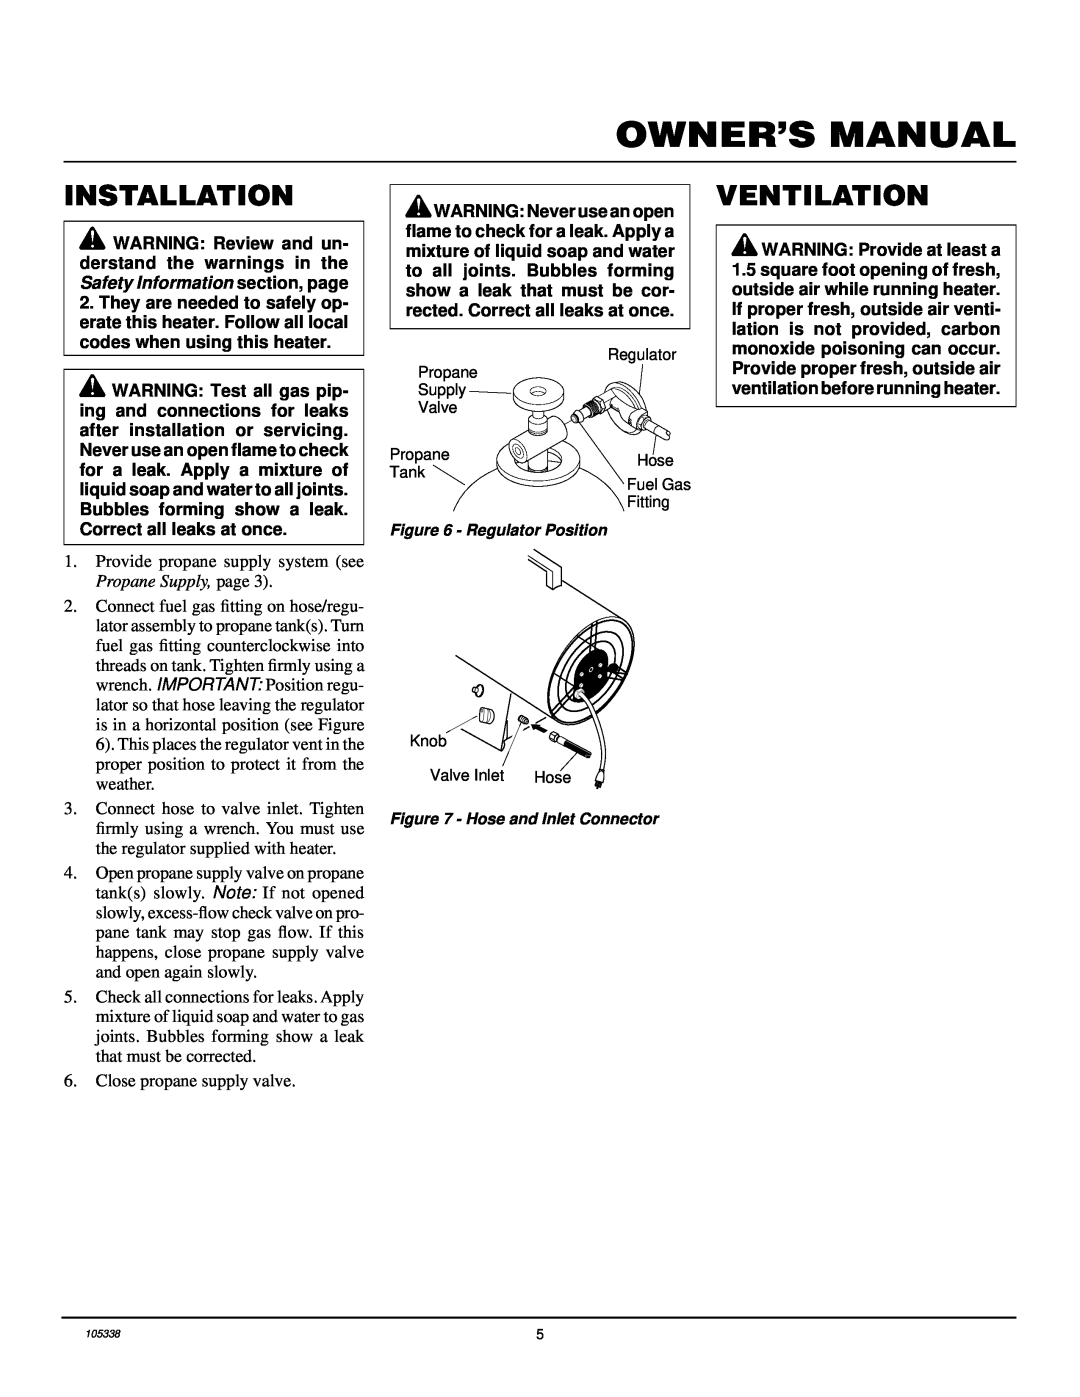 Desa RM50PVA owner manual Installation, Ventilation, WARNING Provide at least a 